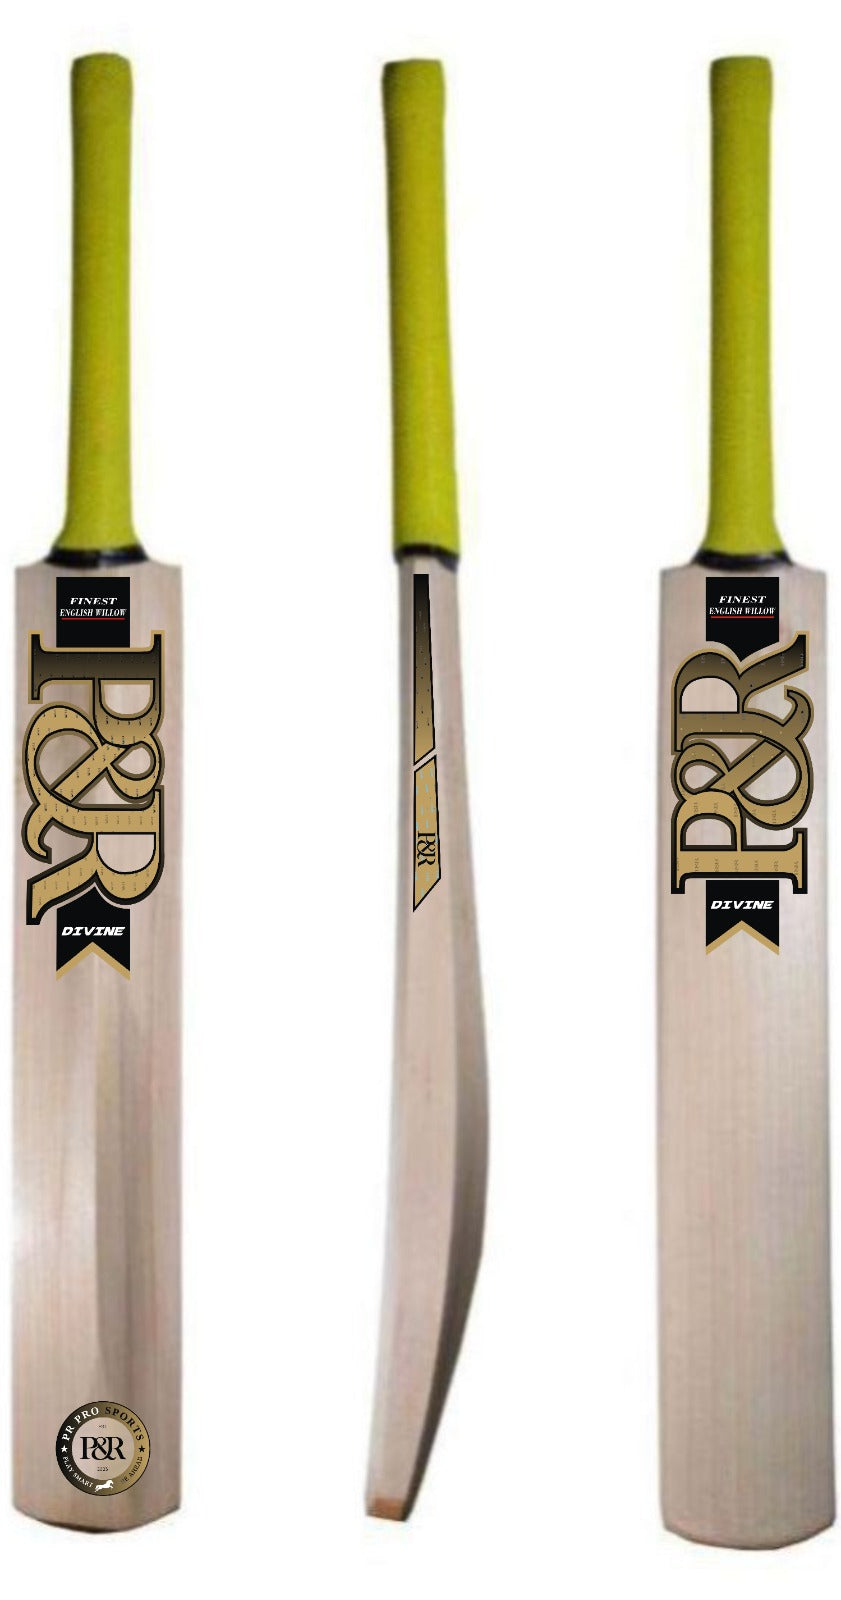 P & R Divine Finest English Willow Cricket Bat - Grade 1